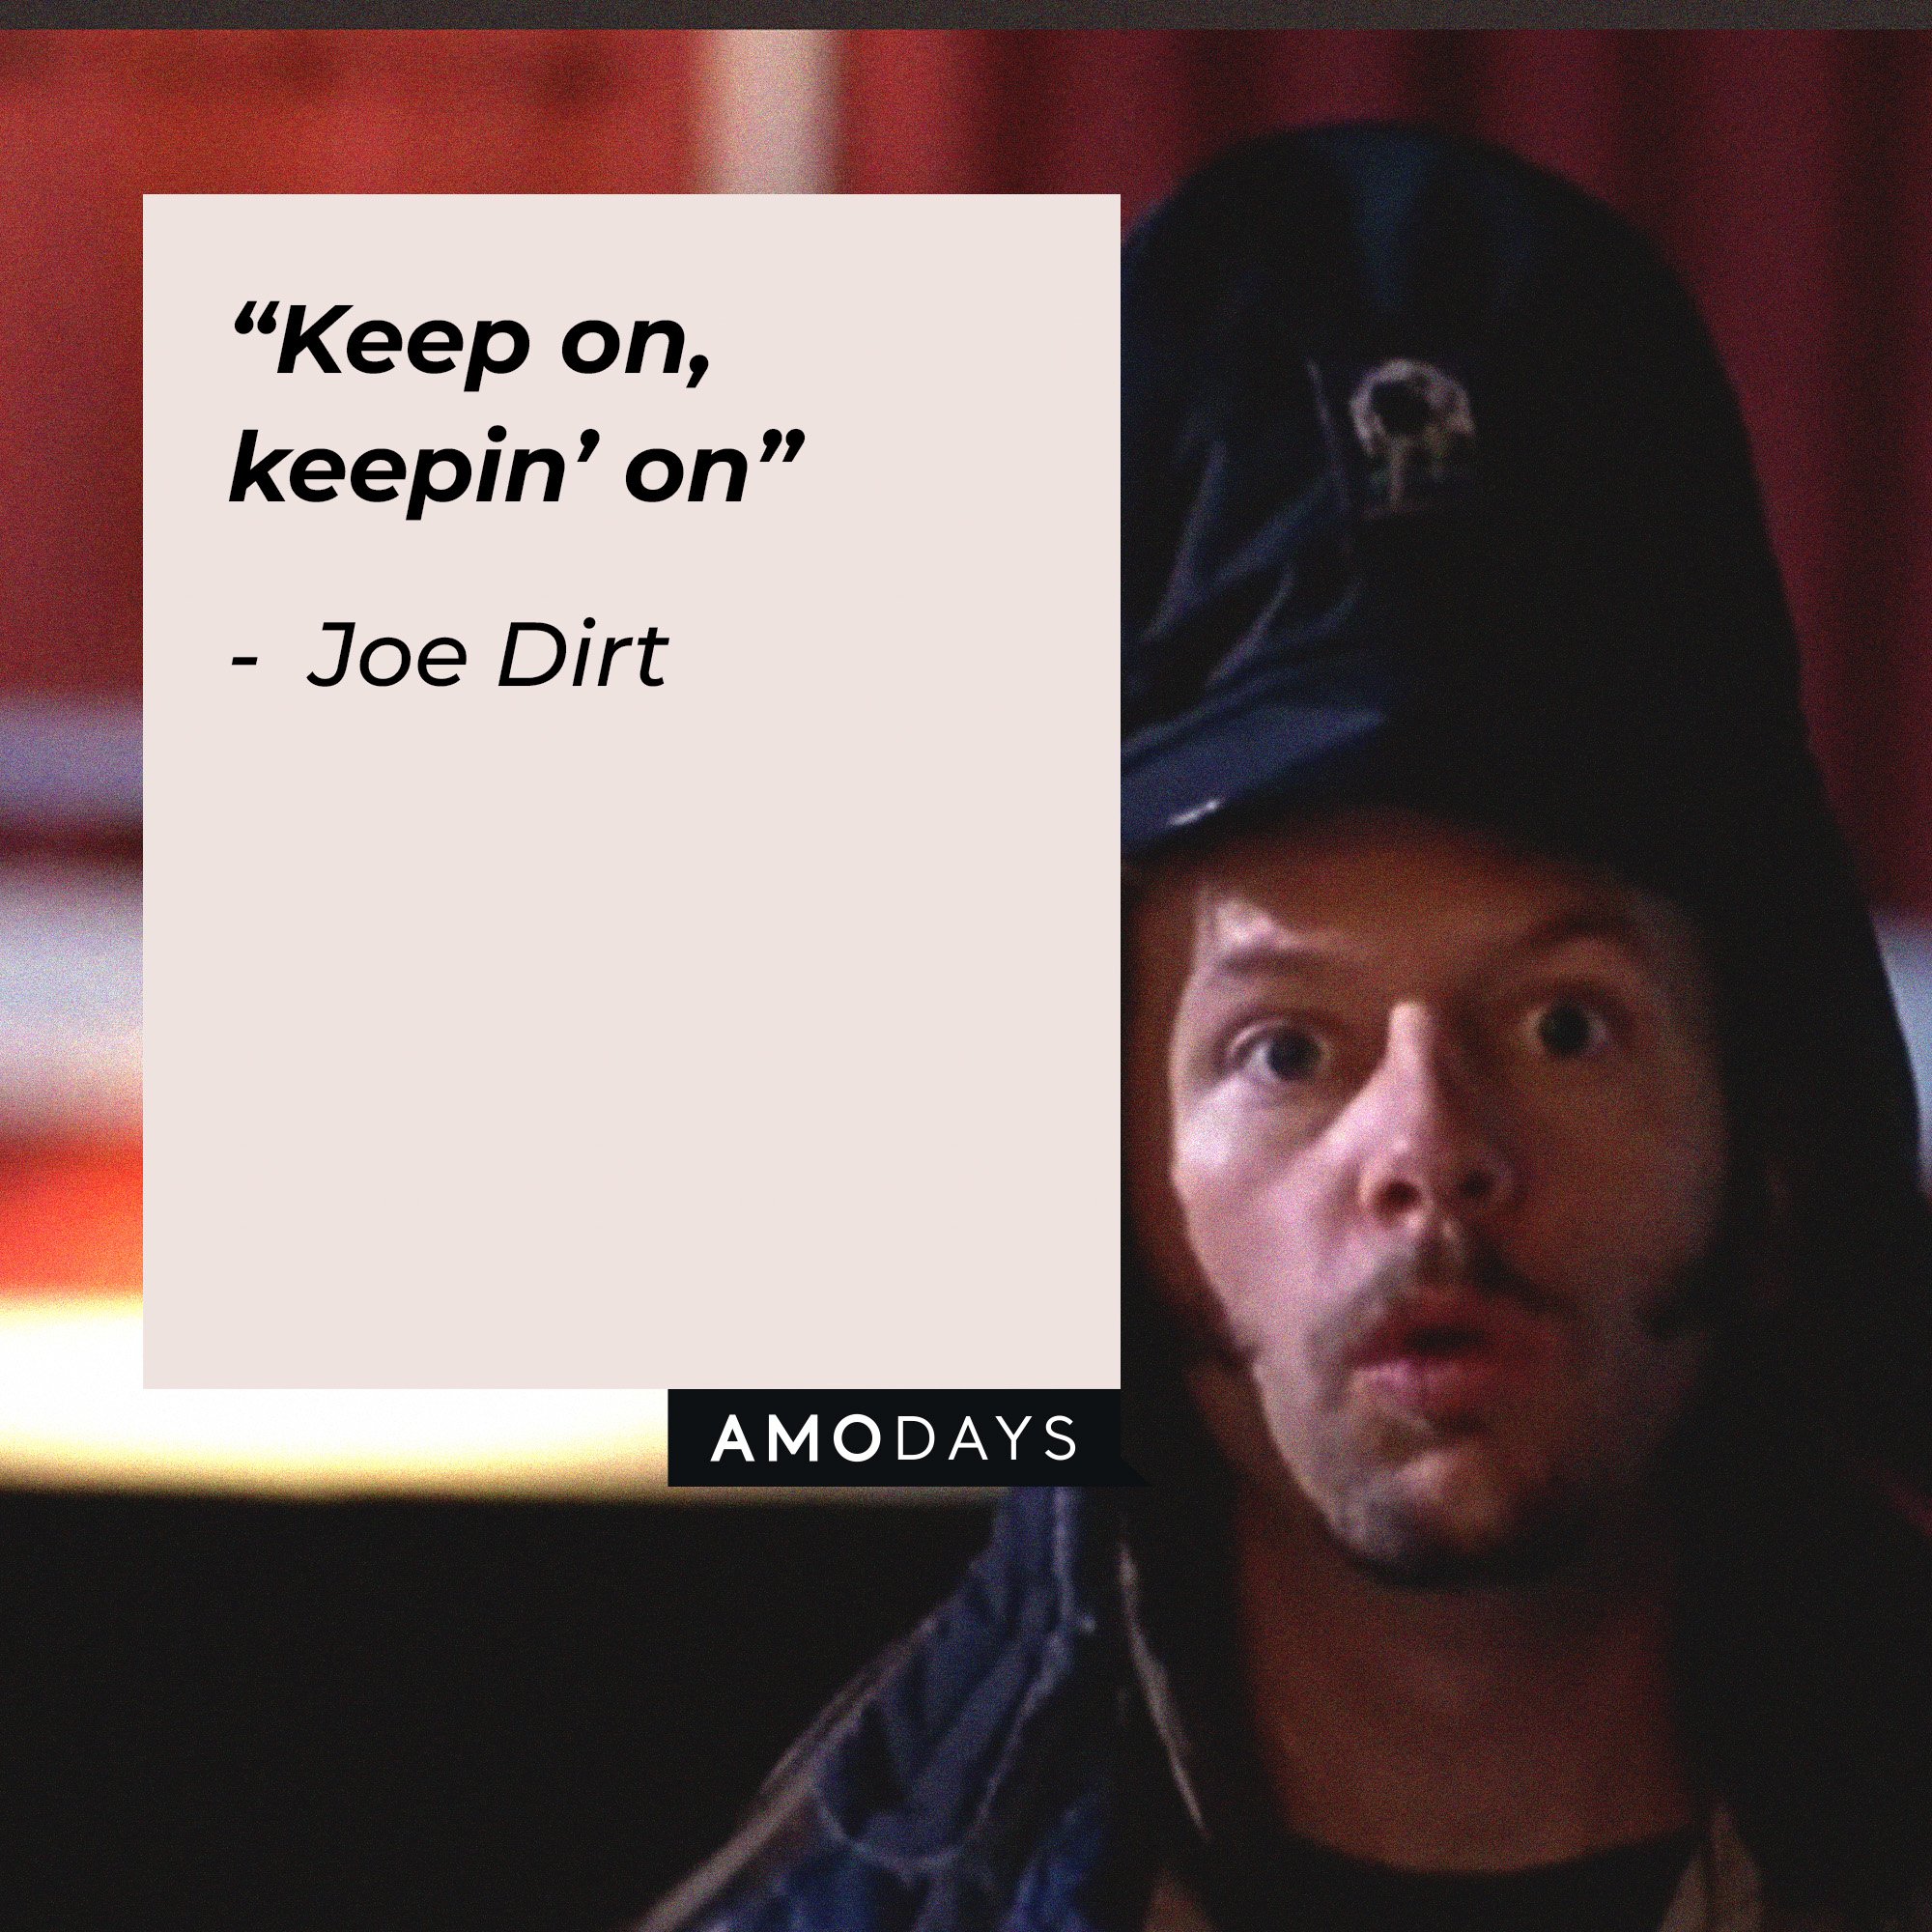 Joe Dirt's quote: “Keep on, keepin’ on” | Image: AmoDays